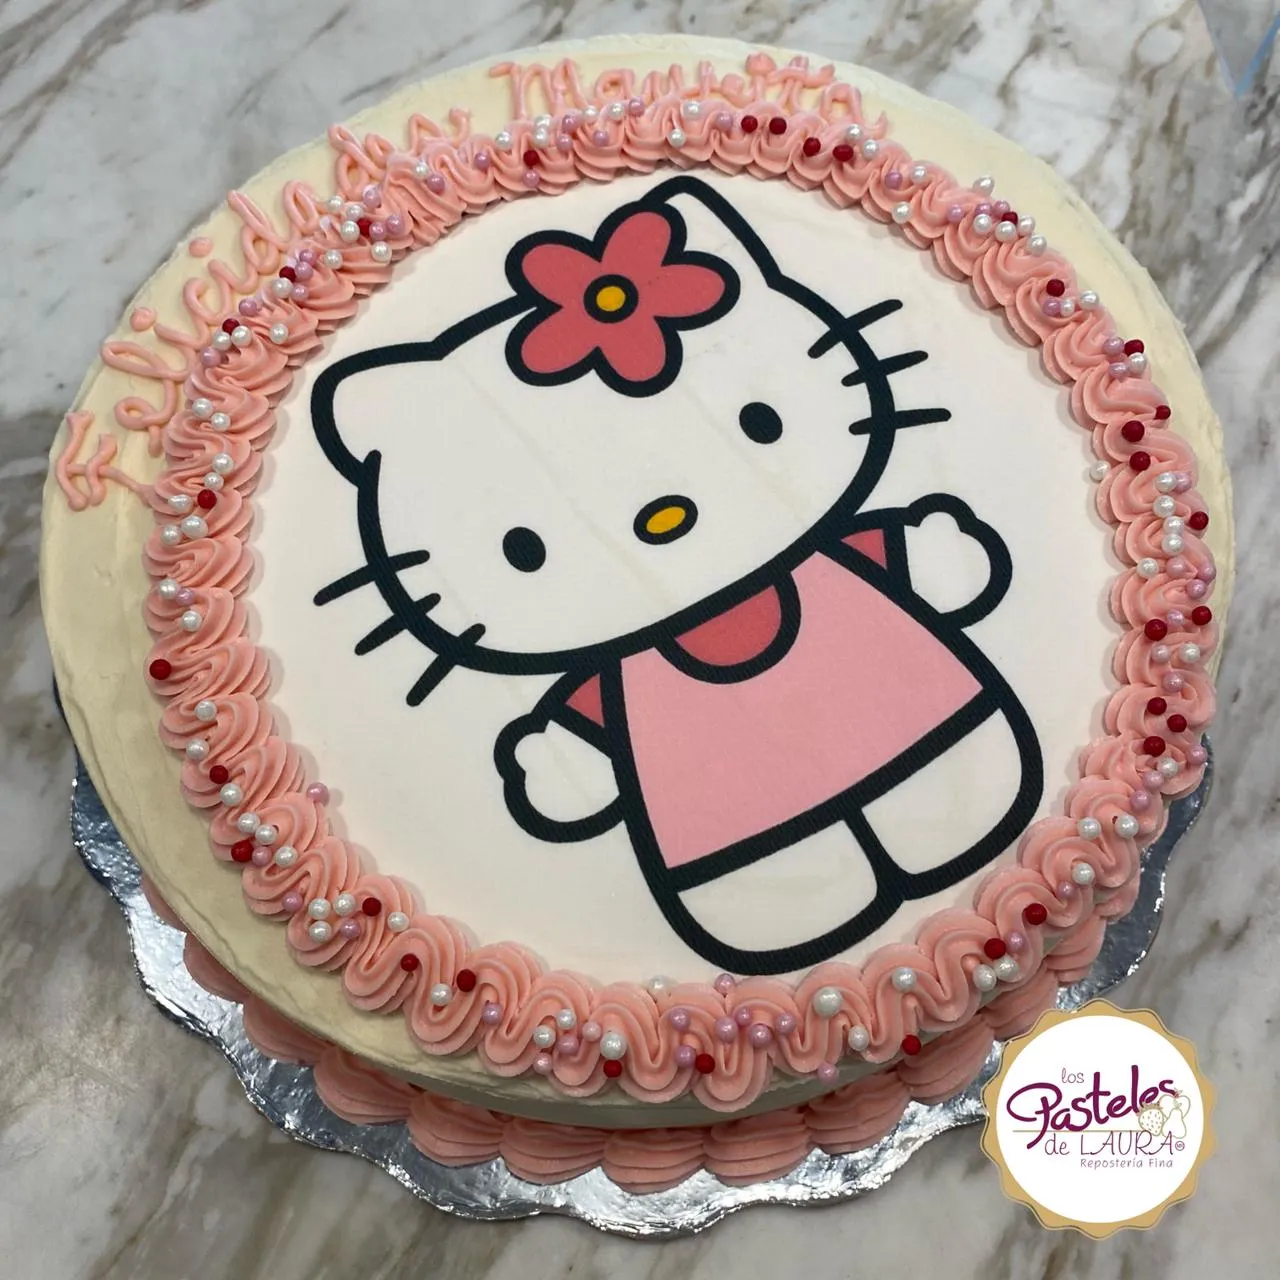 Hello Kitty Cake - Pasteles de Laura